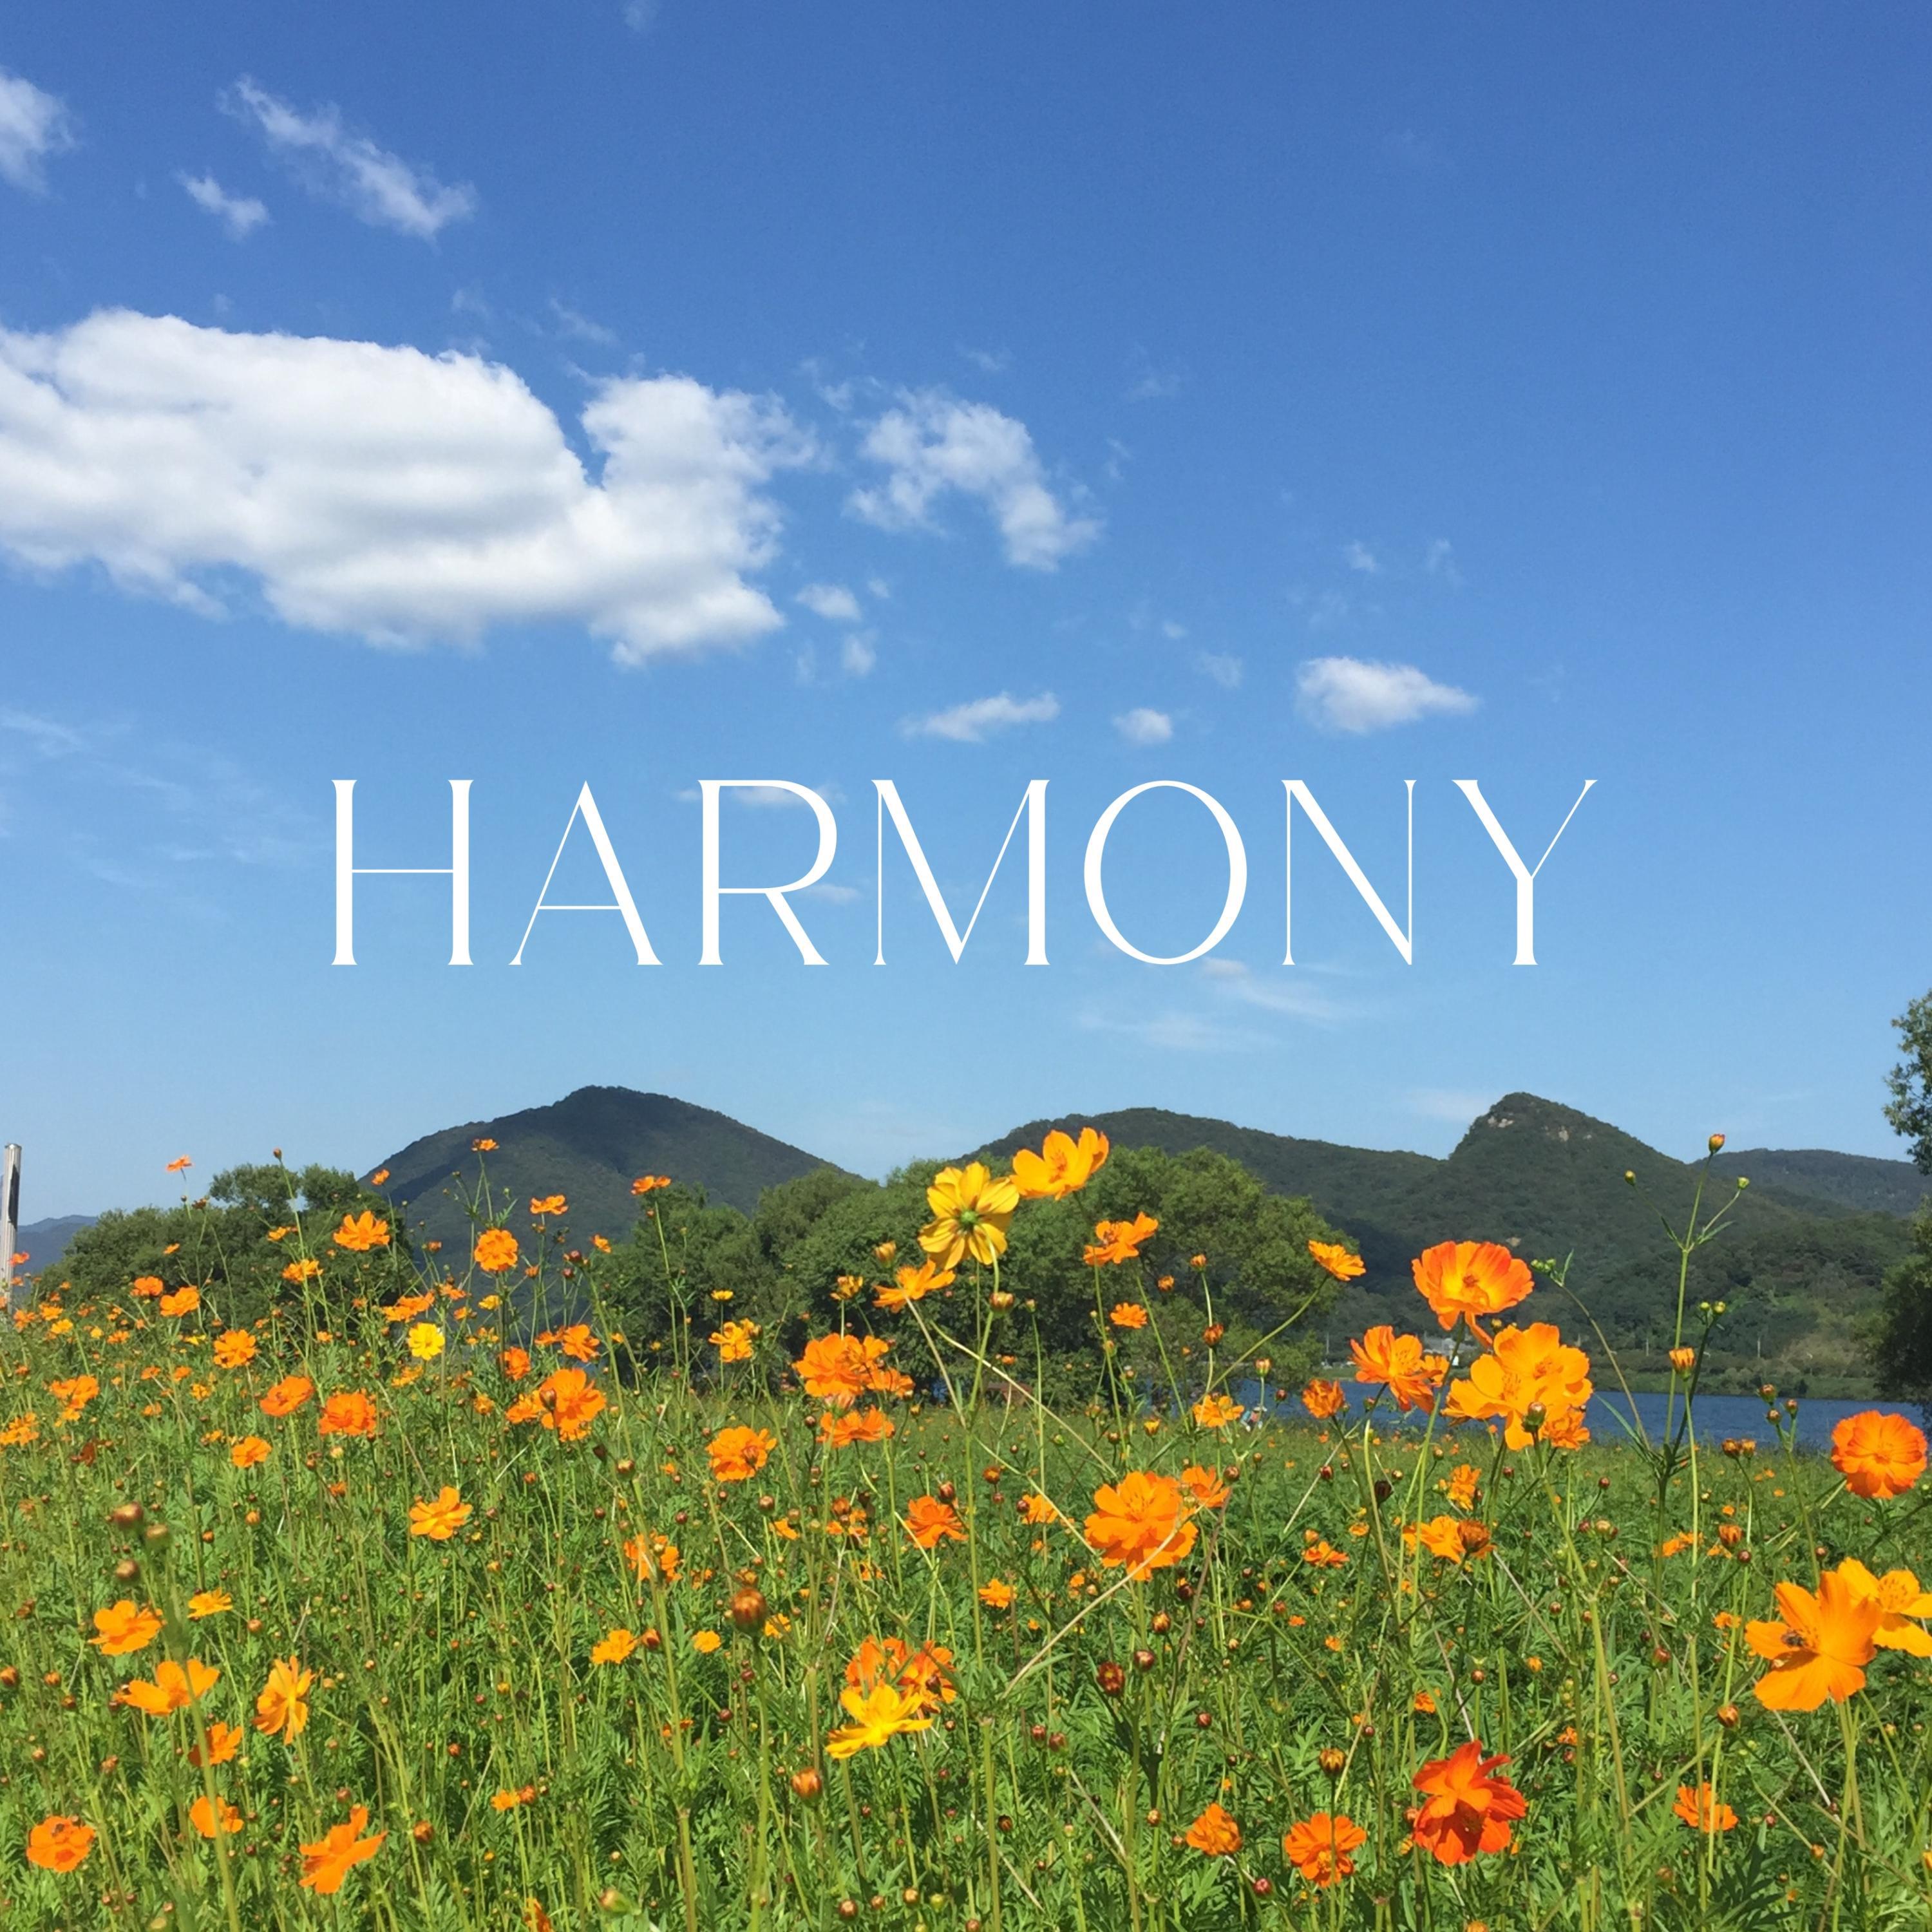 harmony haven - The Return